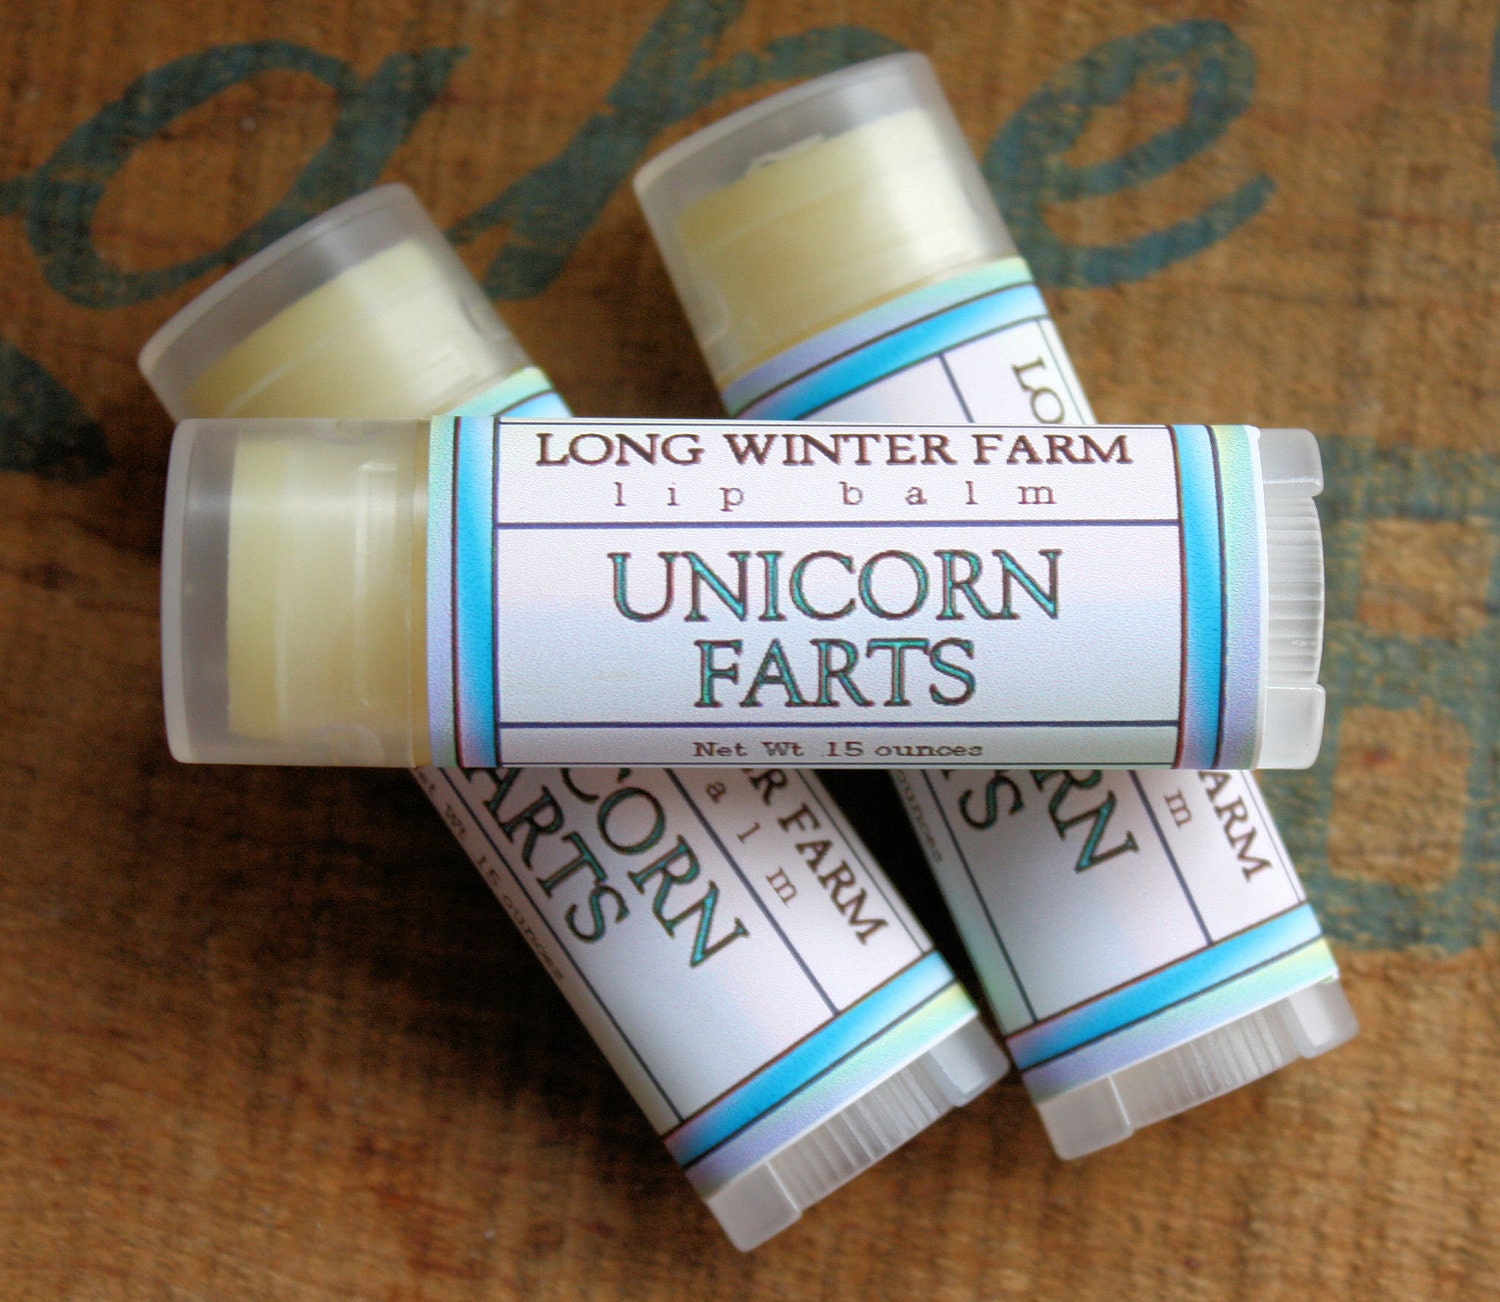 Unicorn Farts Lip Balm - One Tube Beeswax Shea Cocoa Butter Jojoba